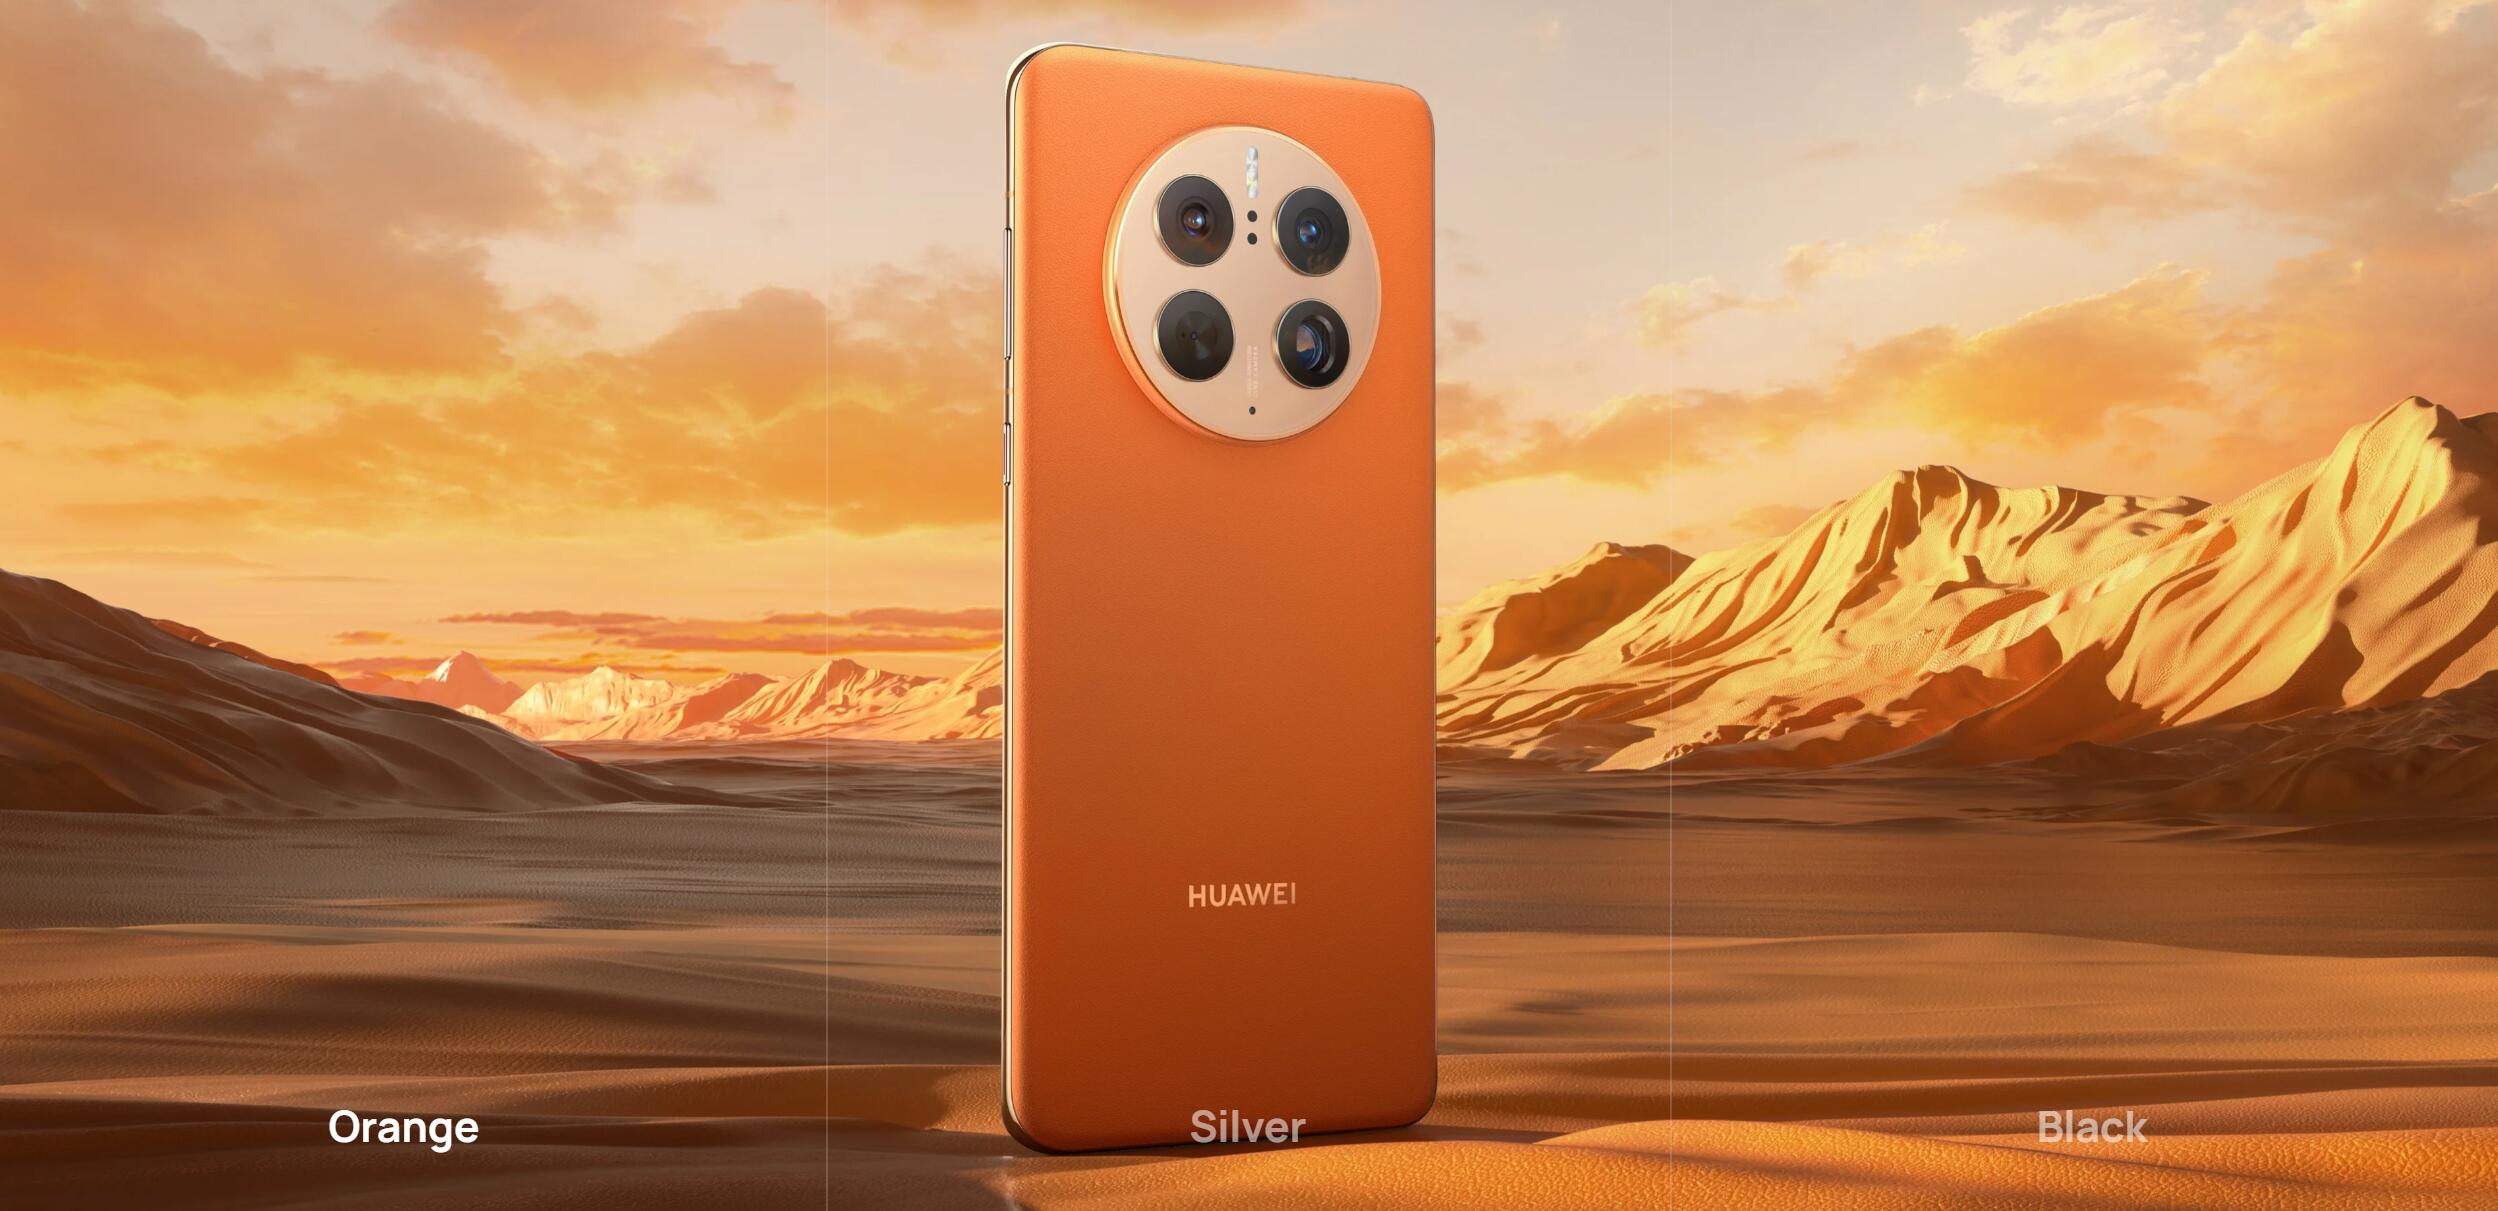 Huawei Mate 50 Pro